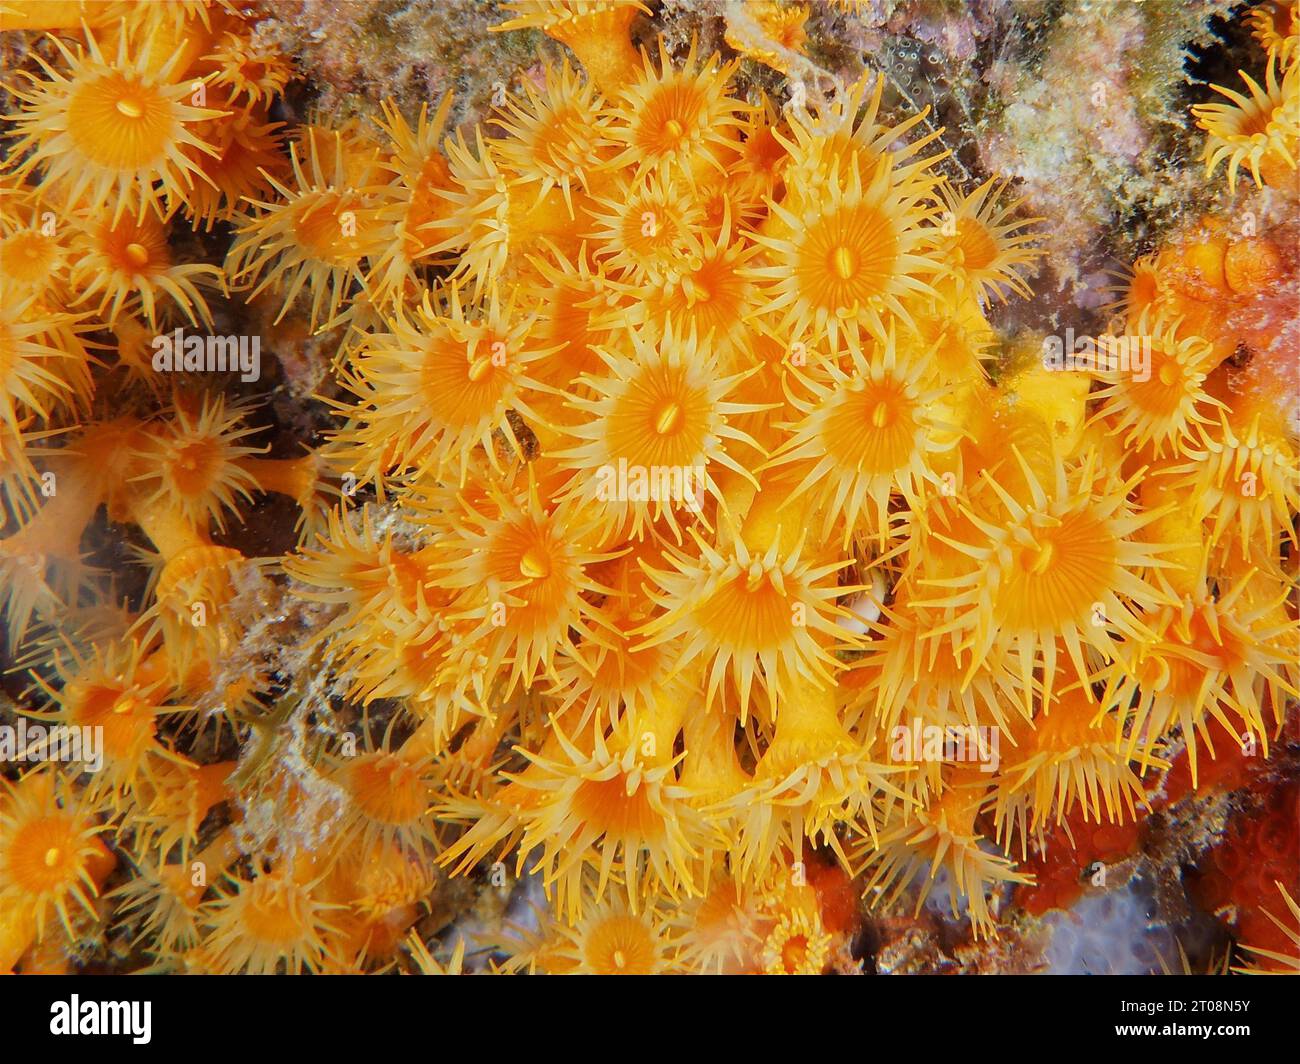 Yellow cluster anemone (Parazoanthus axinellae), Iles Medes dive site, L' Estartit, Costa Brava, Spain, Mediterranean Sea Stock Photo